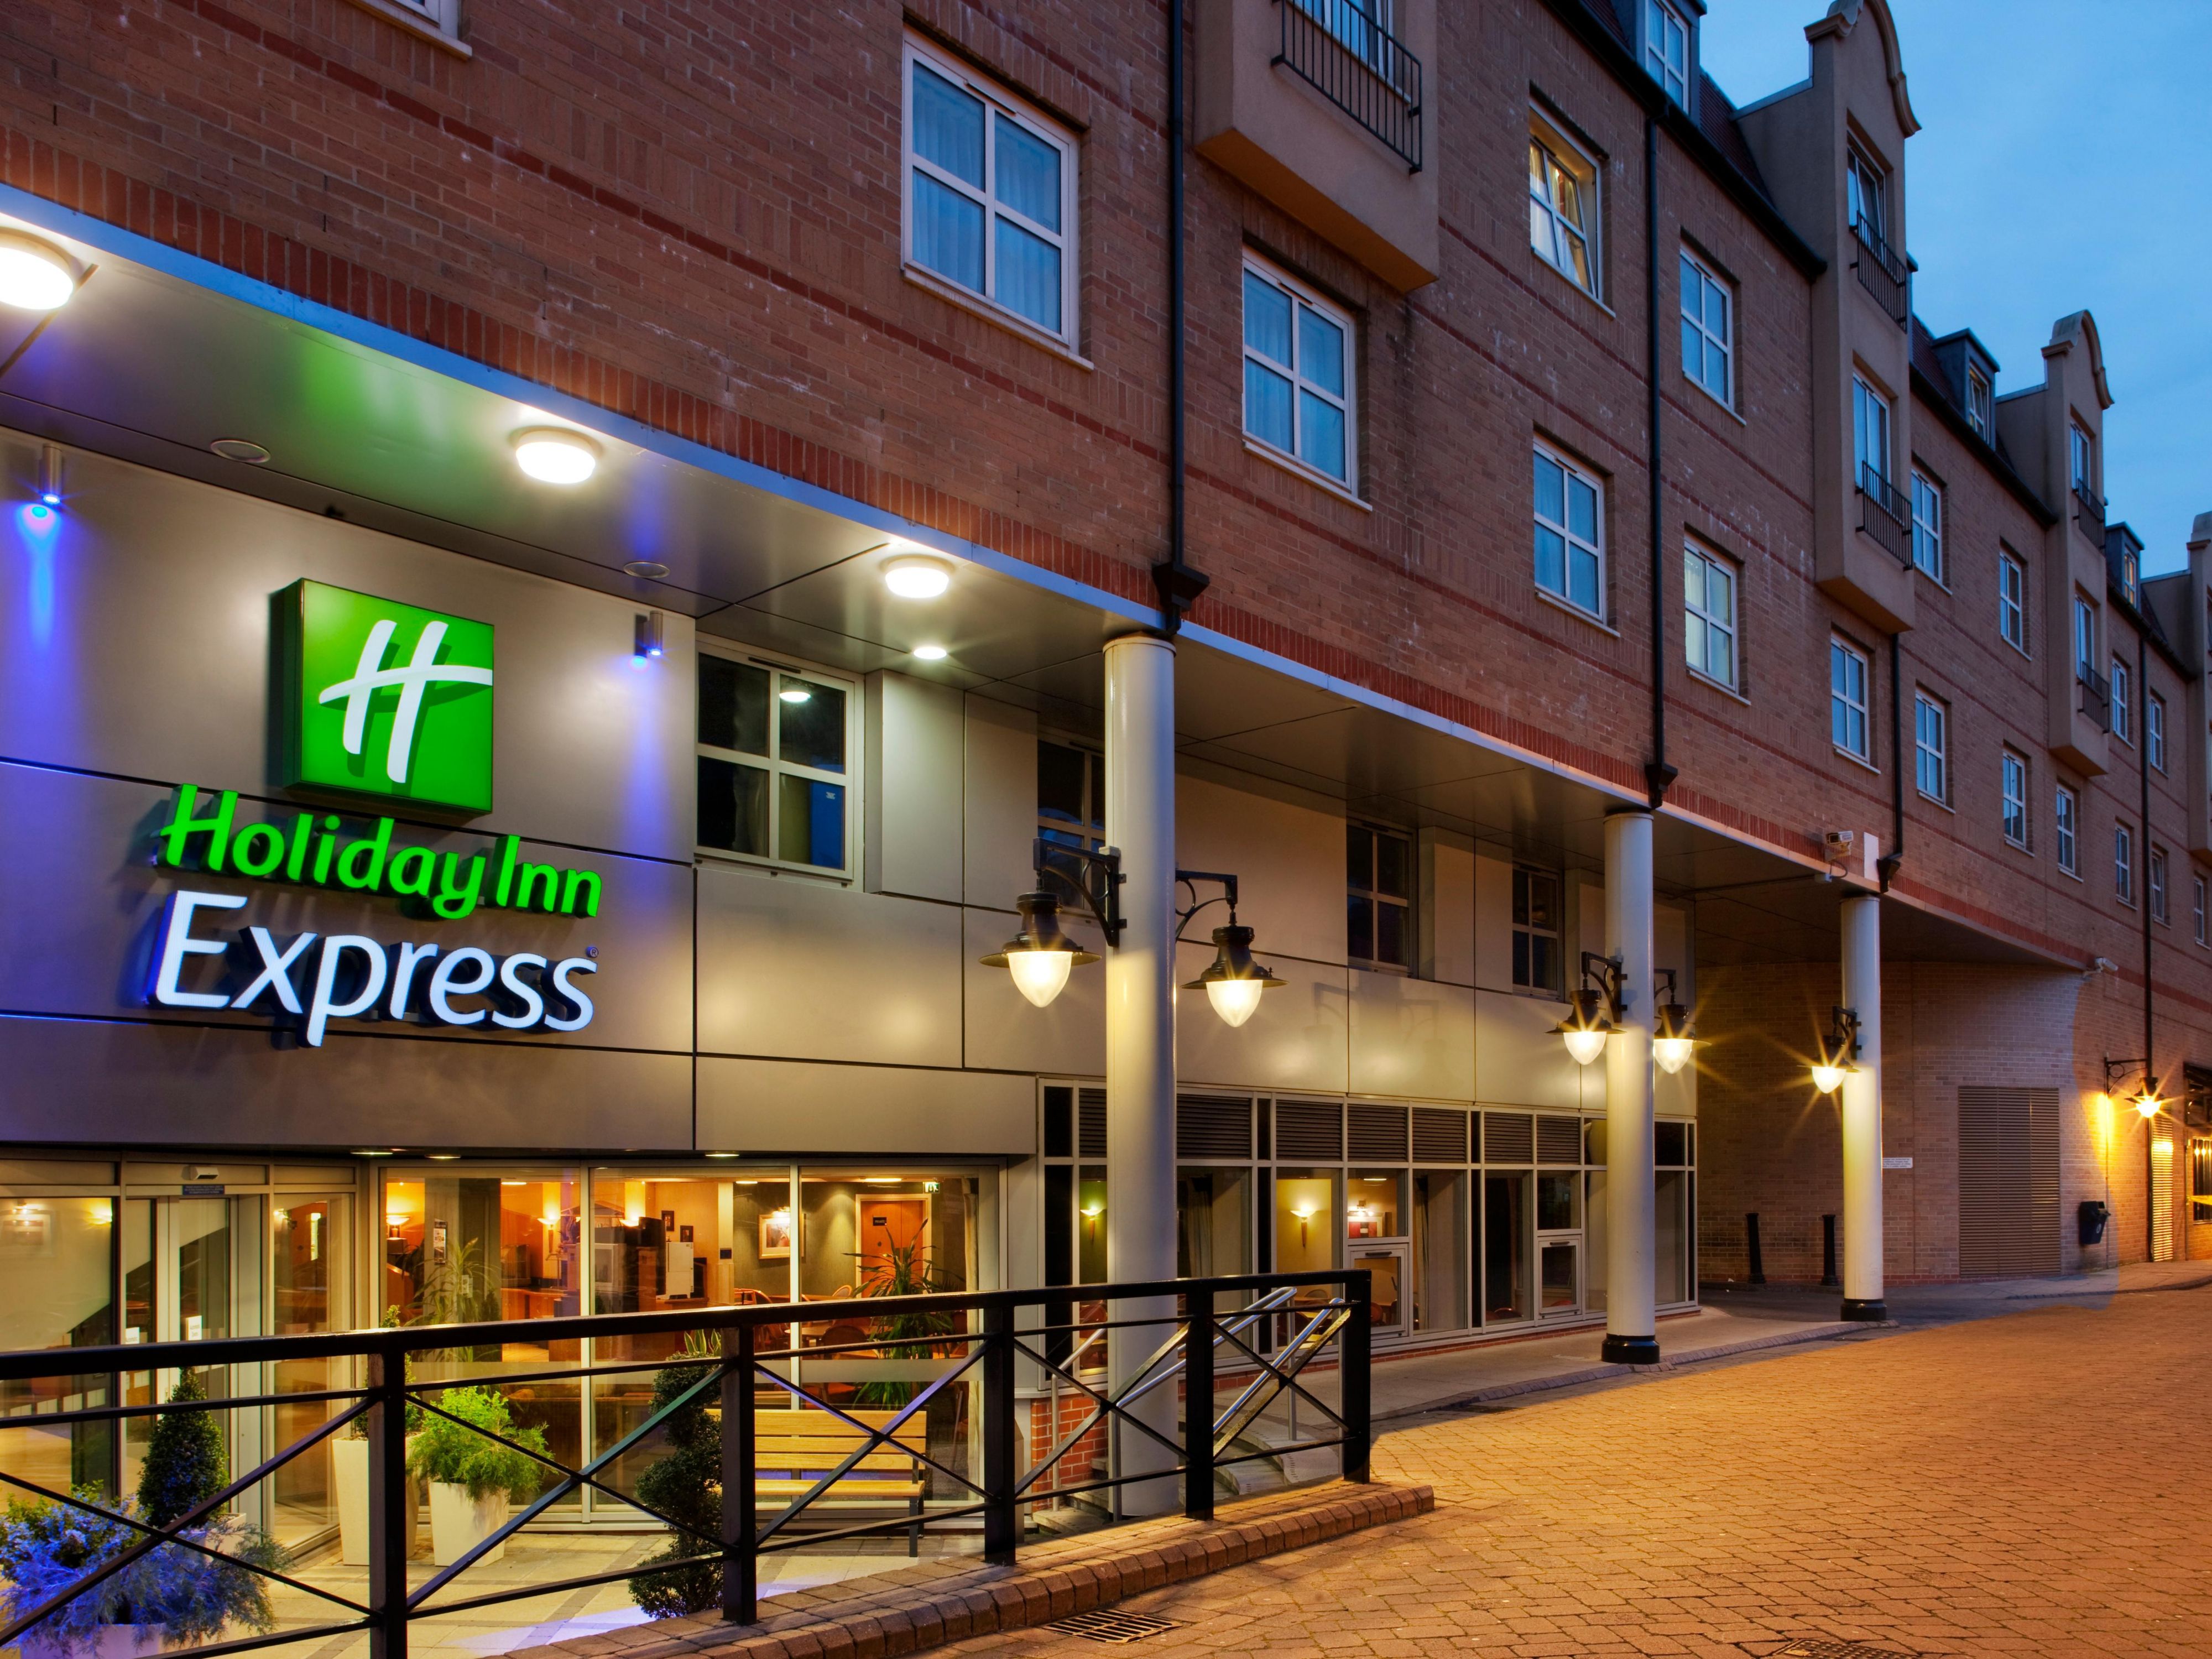 Hotel Holiday Inn Express - Homecare24